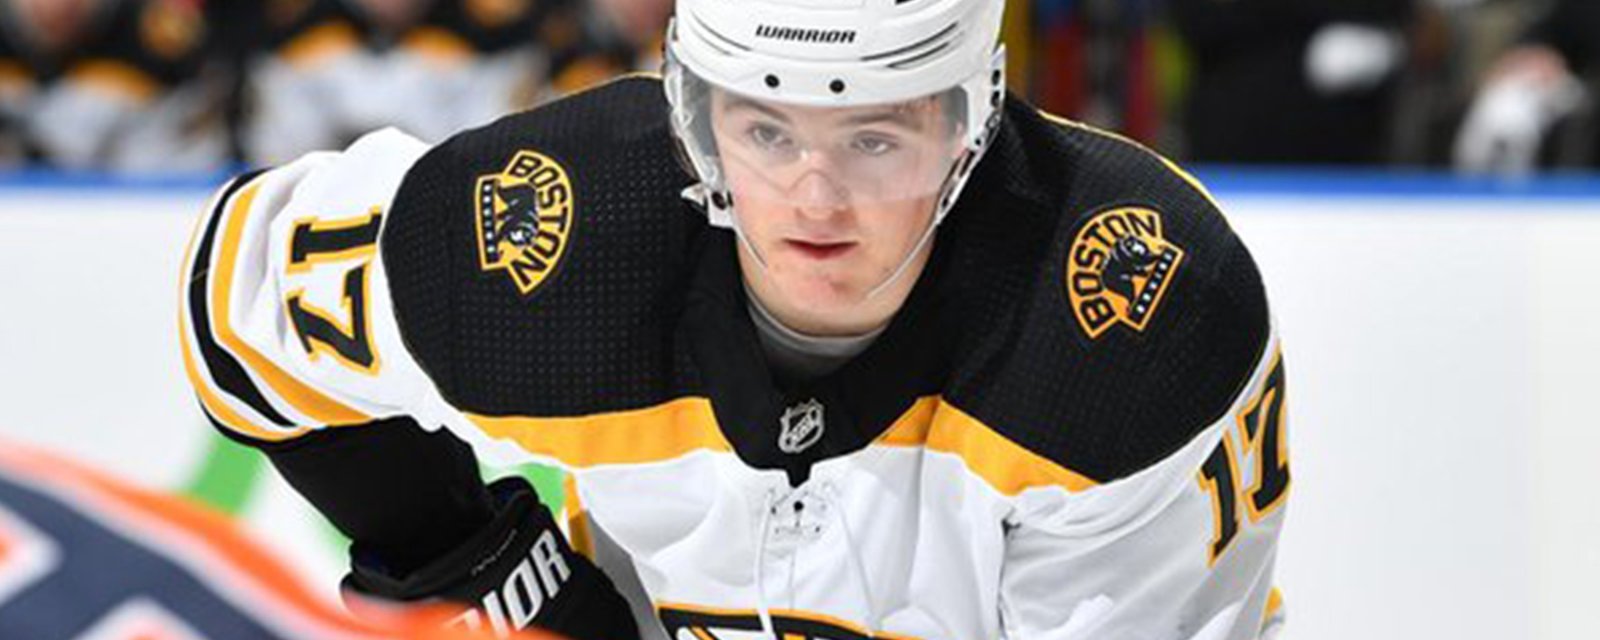 Breaking: Bruins call up top prospect Donato